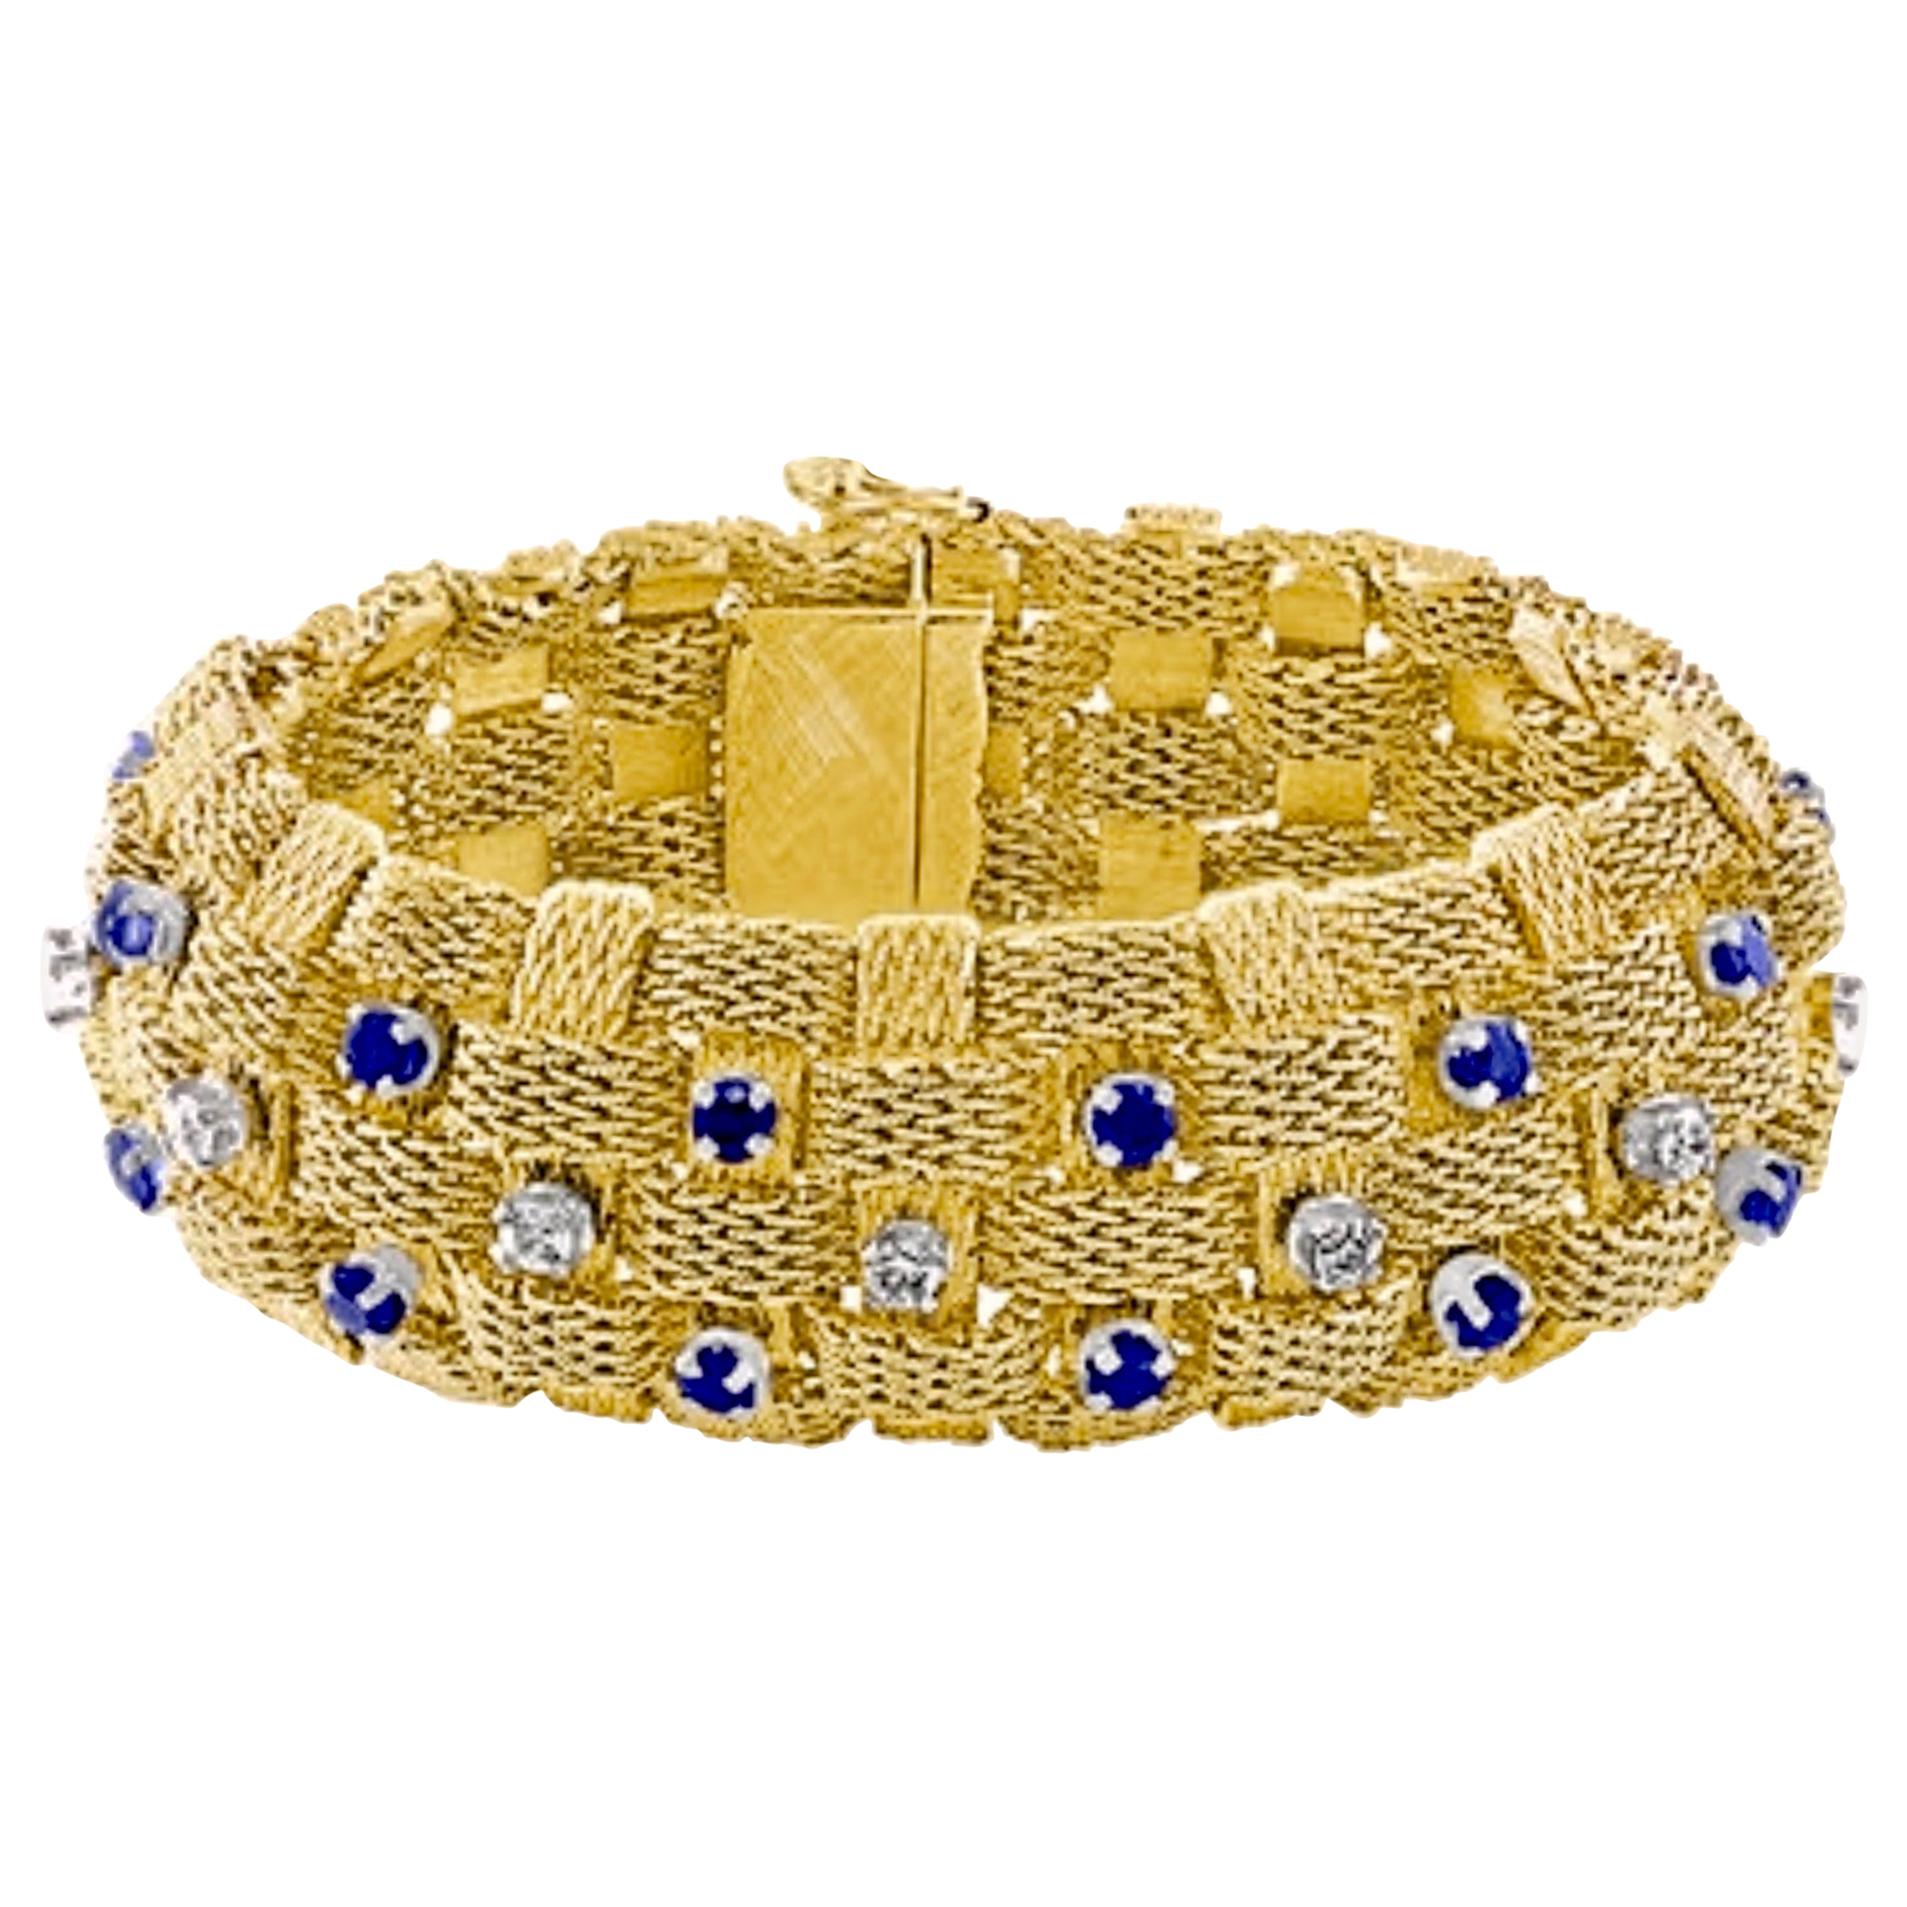 3 Carat Sapphire and 2 Carat Diamond Bracelet in 18 Karat Yellow Gold 116 Gm For Sale